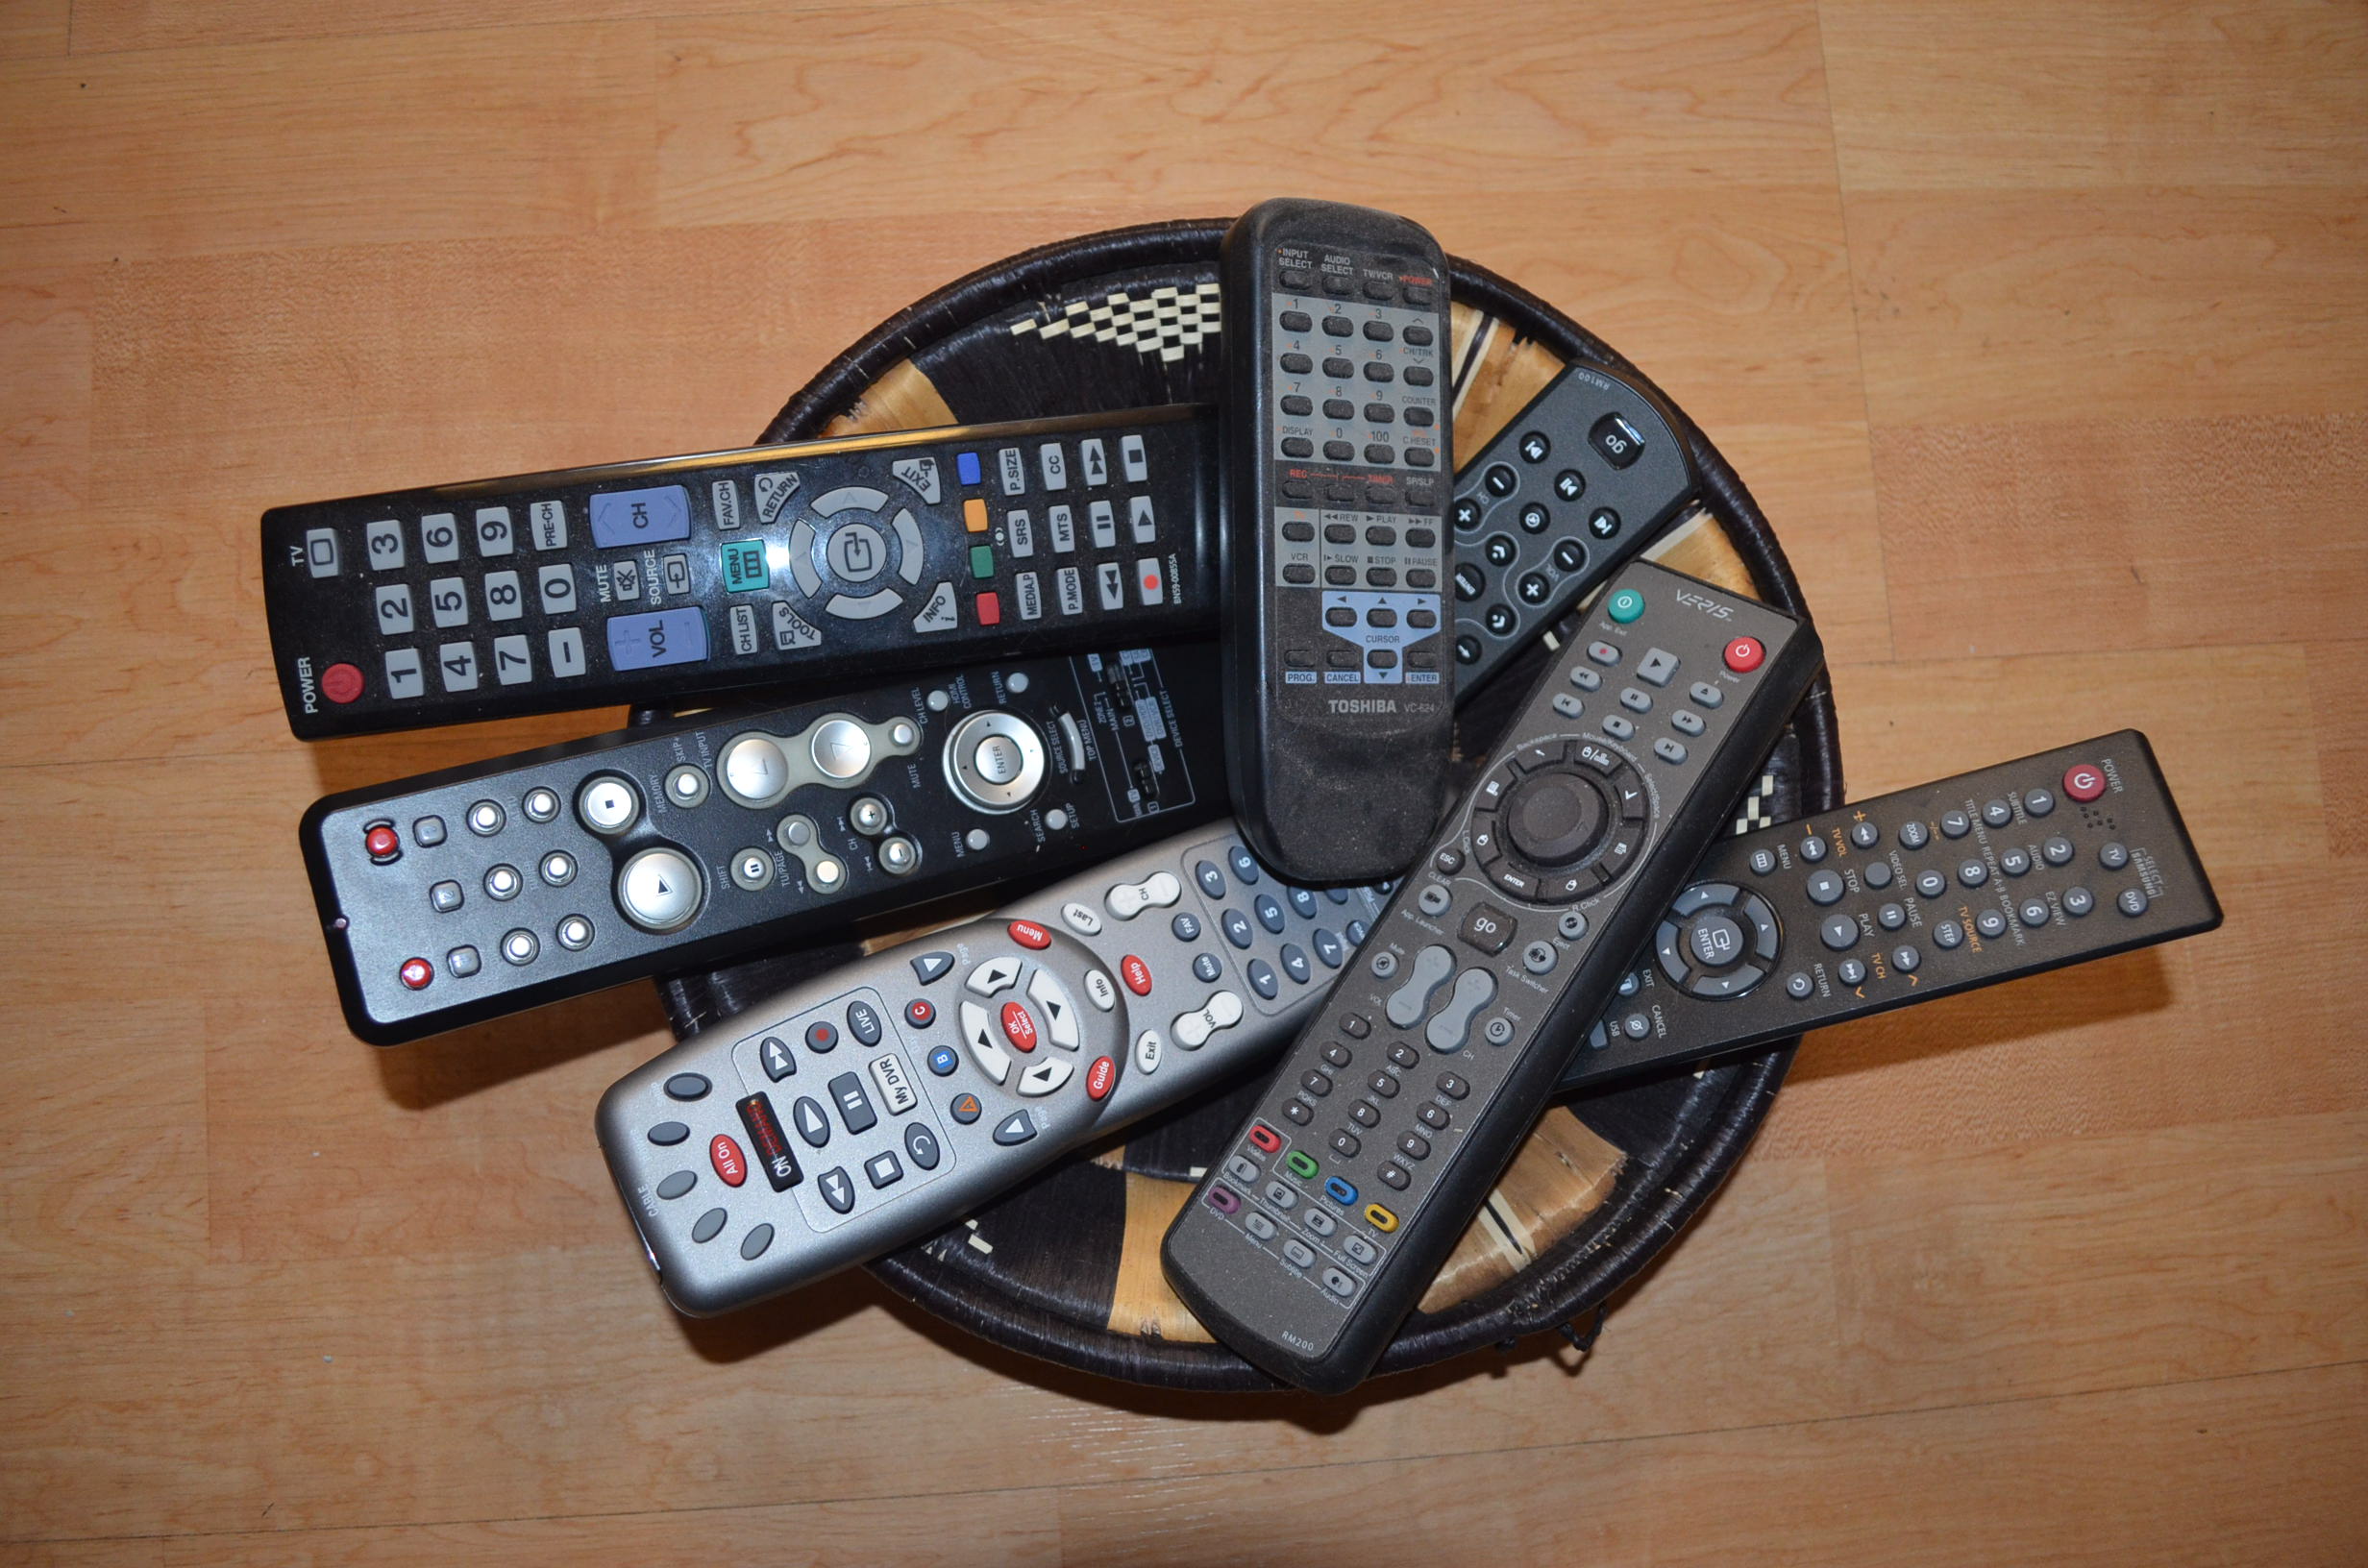 Too many remotes